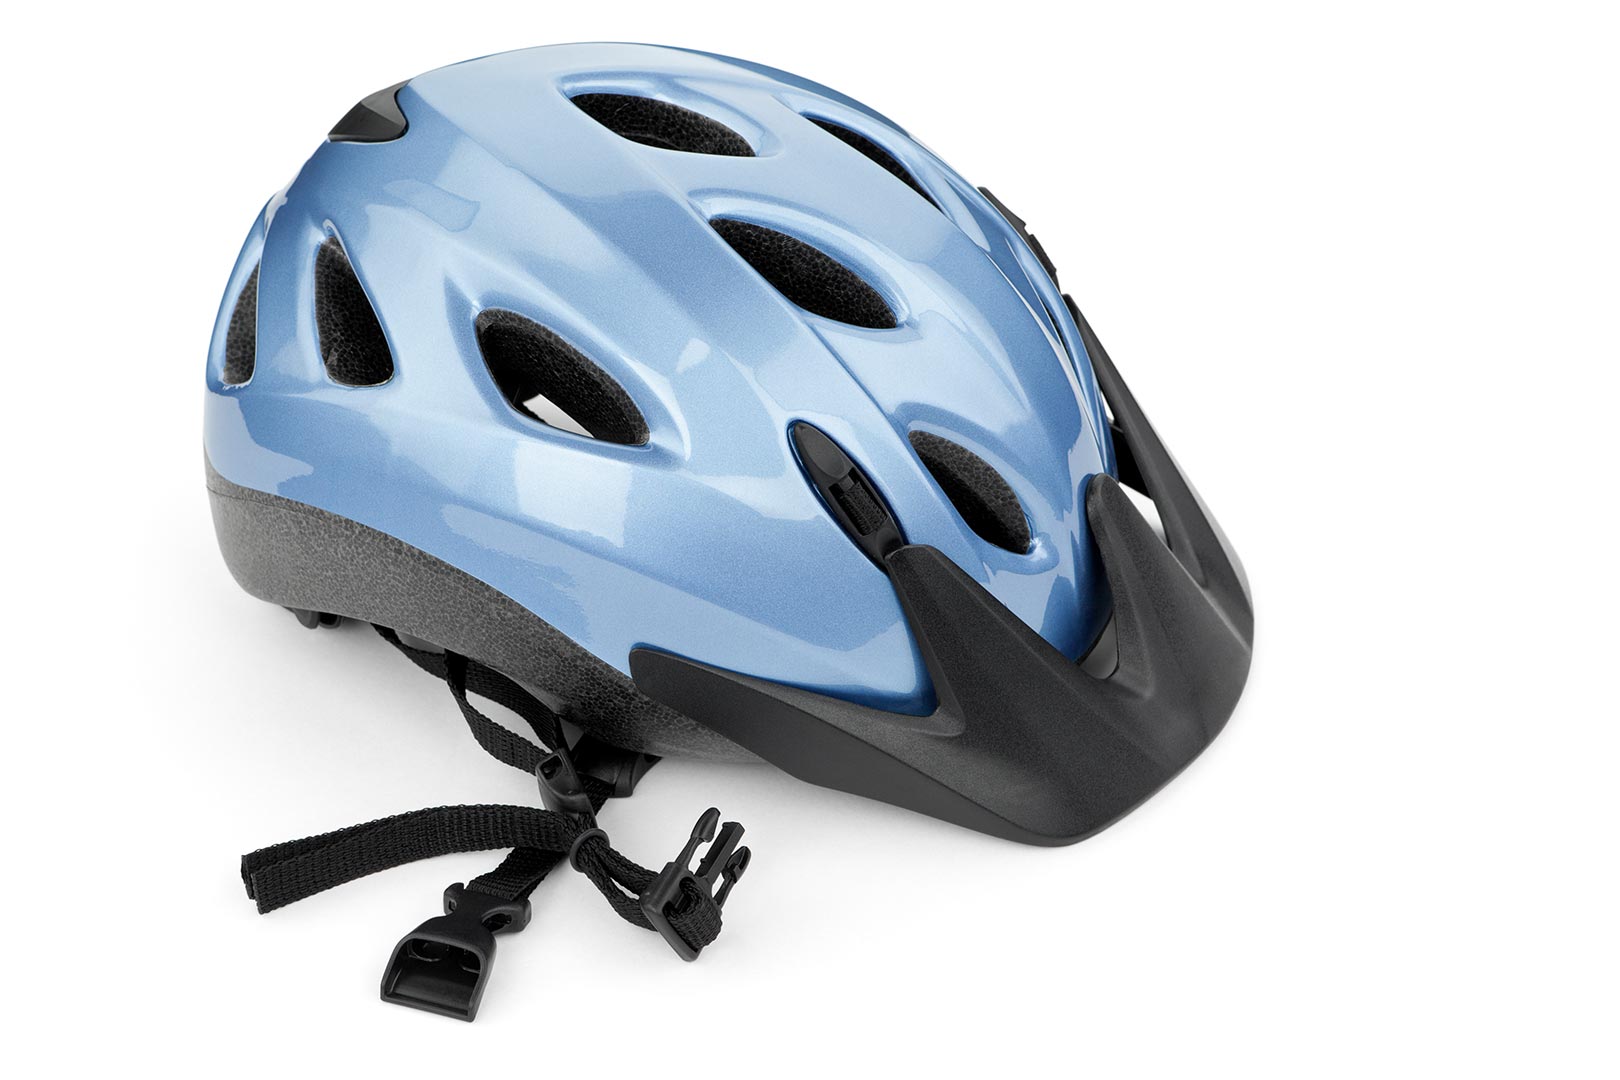 Photograph of bike helmet